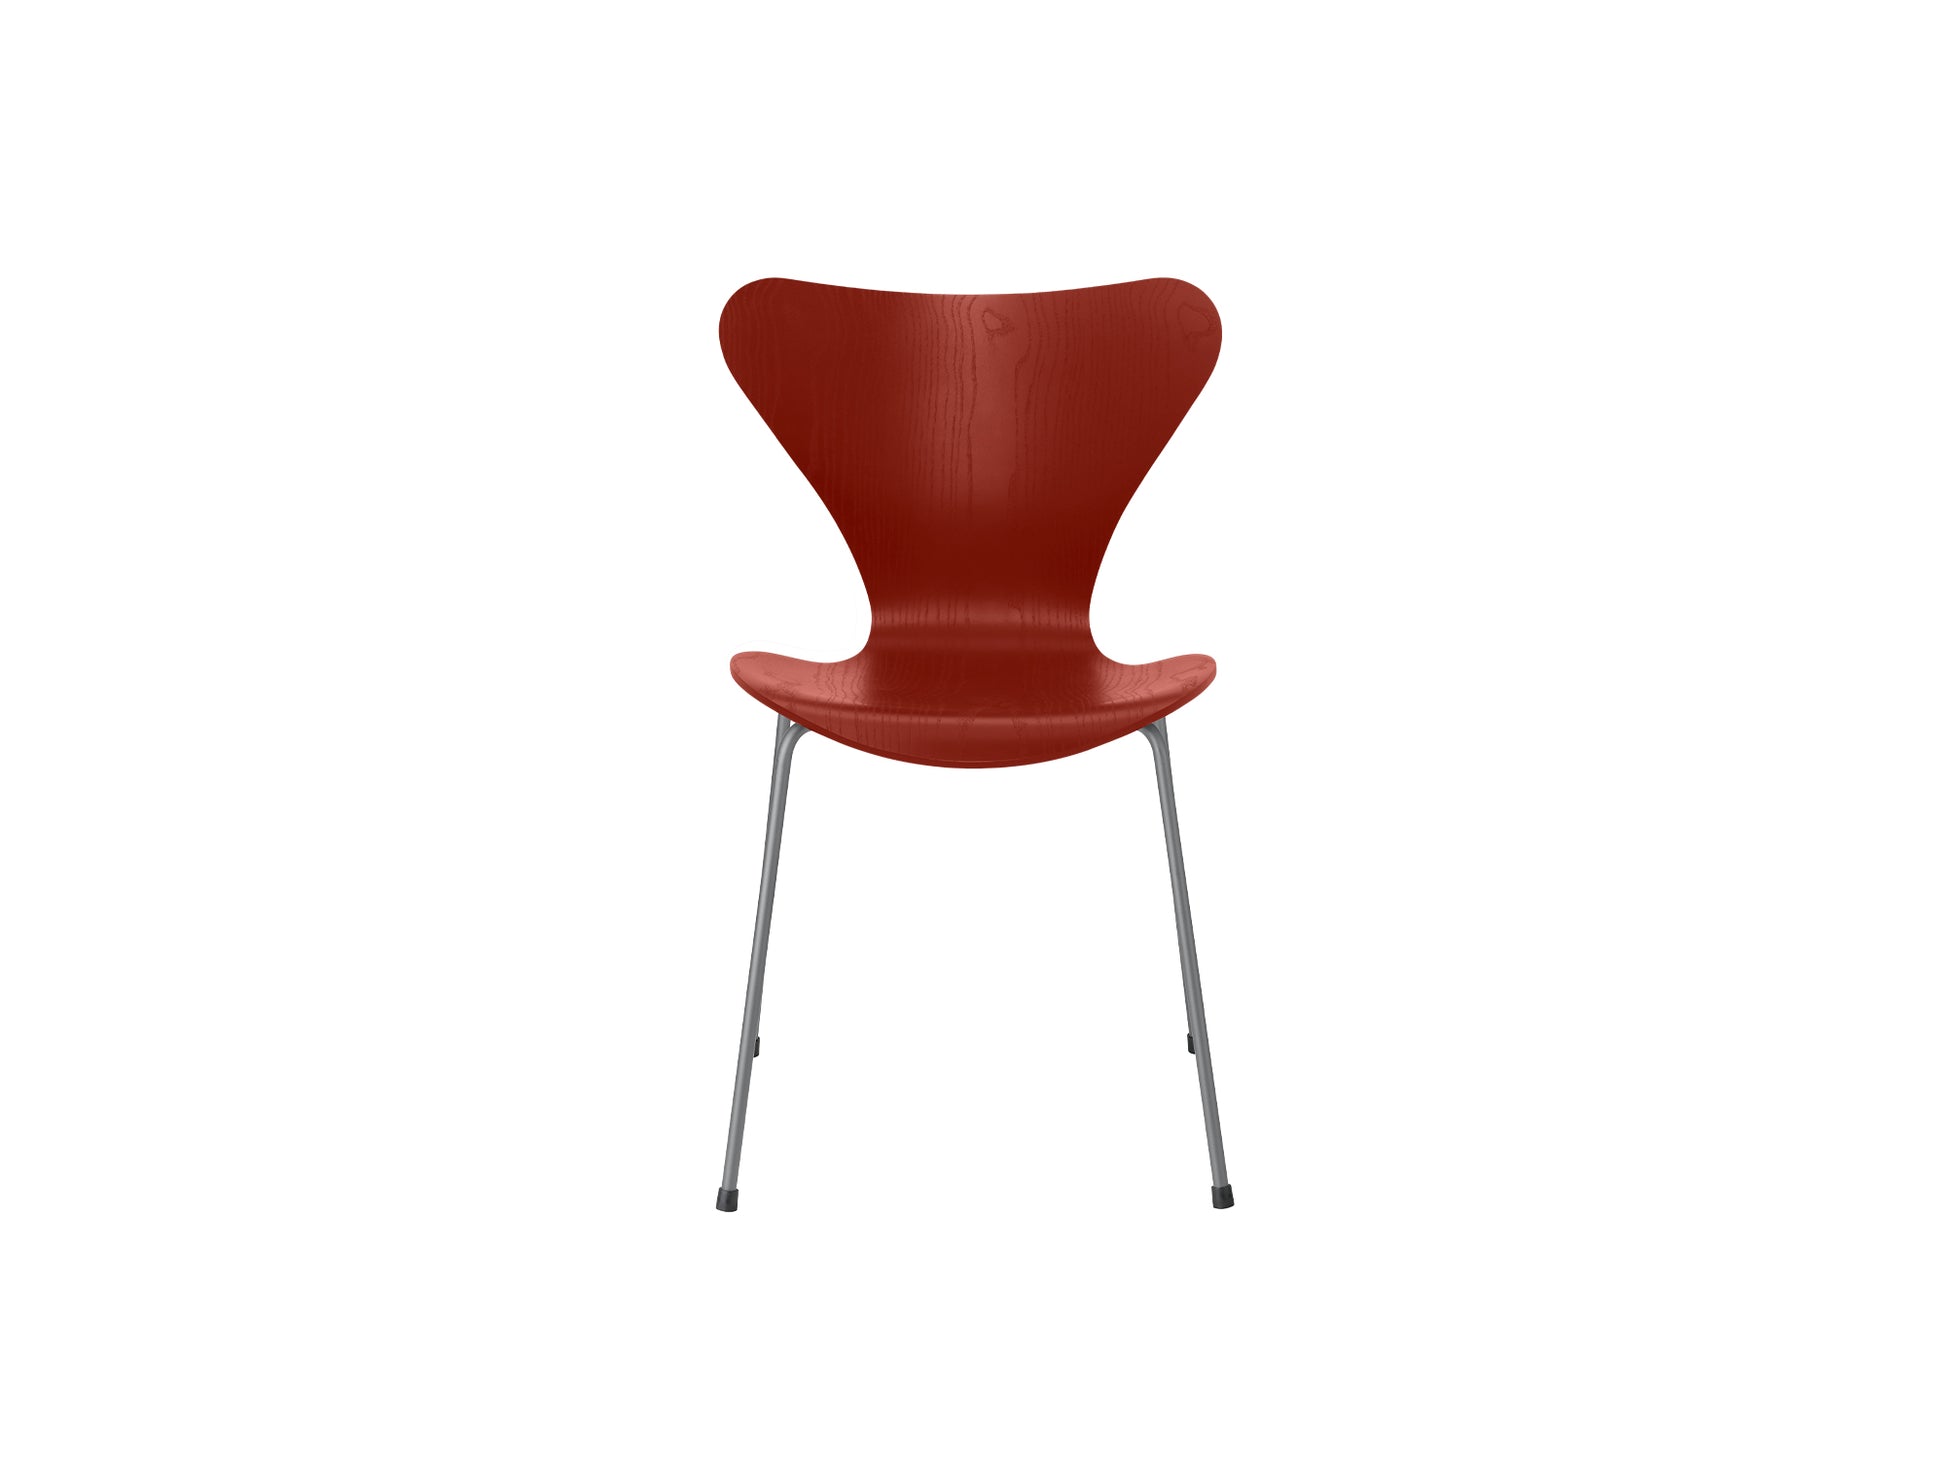 Series 7™ 3107 Dining Chair by Fritz Hansen - Venetian Red Coloured Ash Veneer Shell / Silver Grey Steel